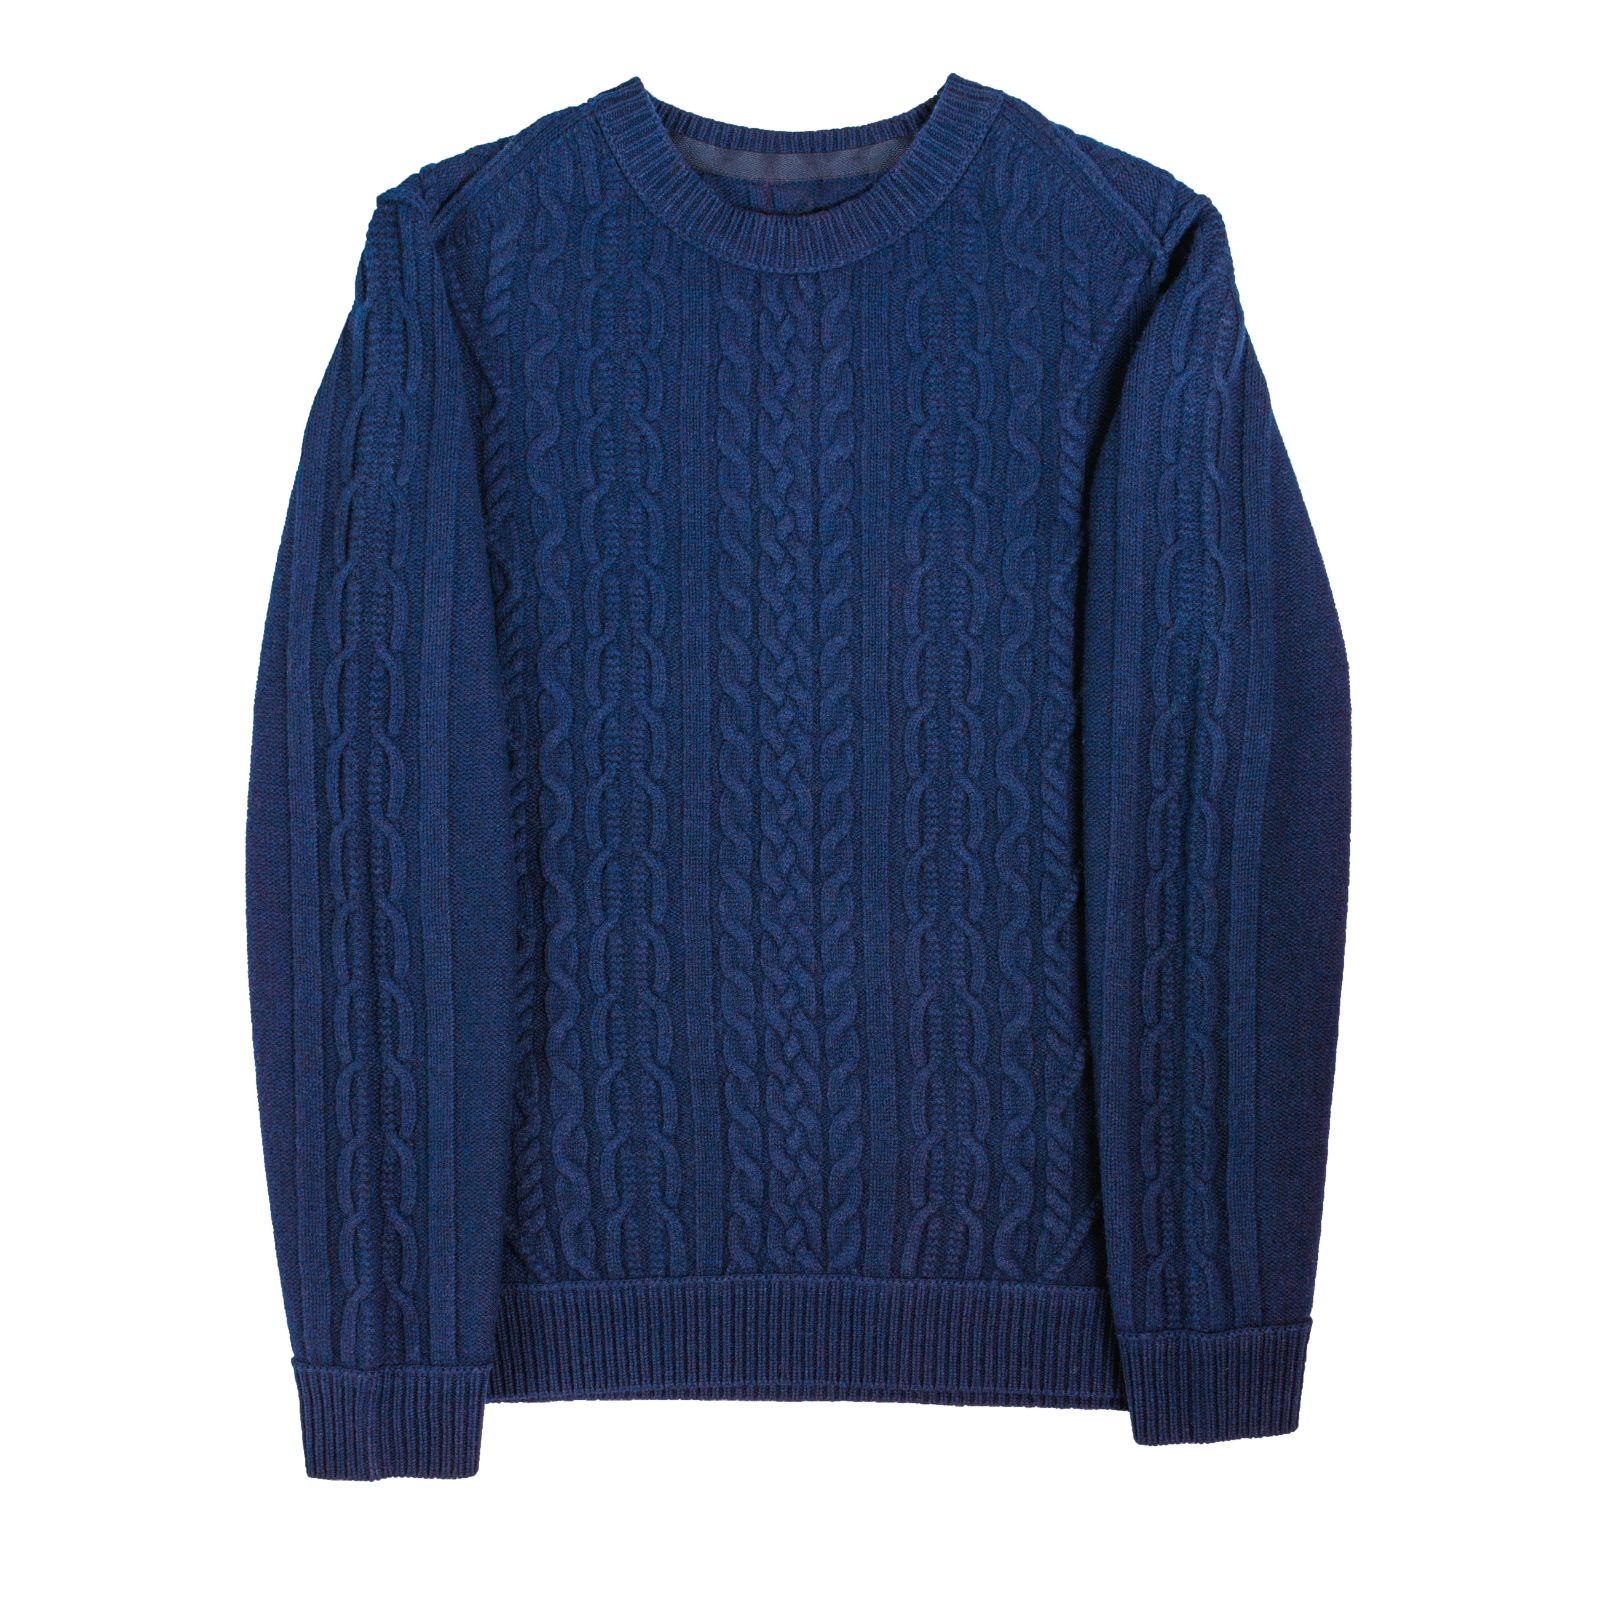 Premium Quality Custom Made dark Blue Sweater For Kids.